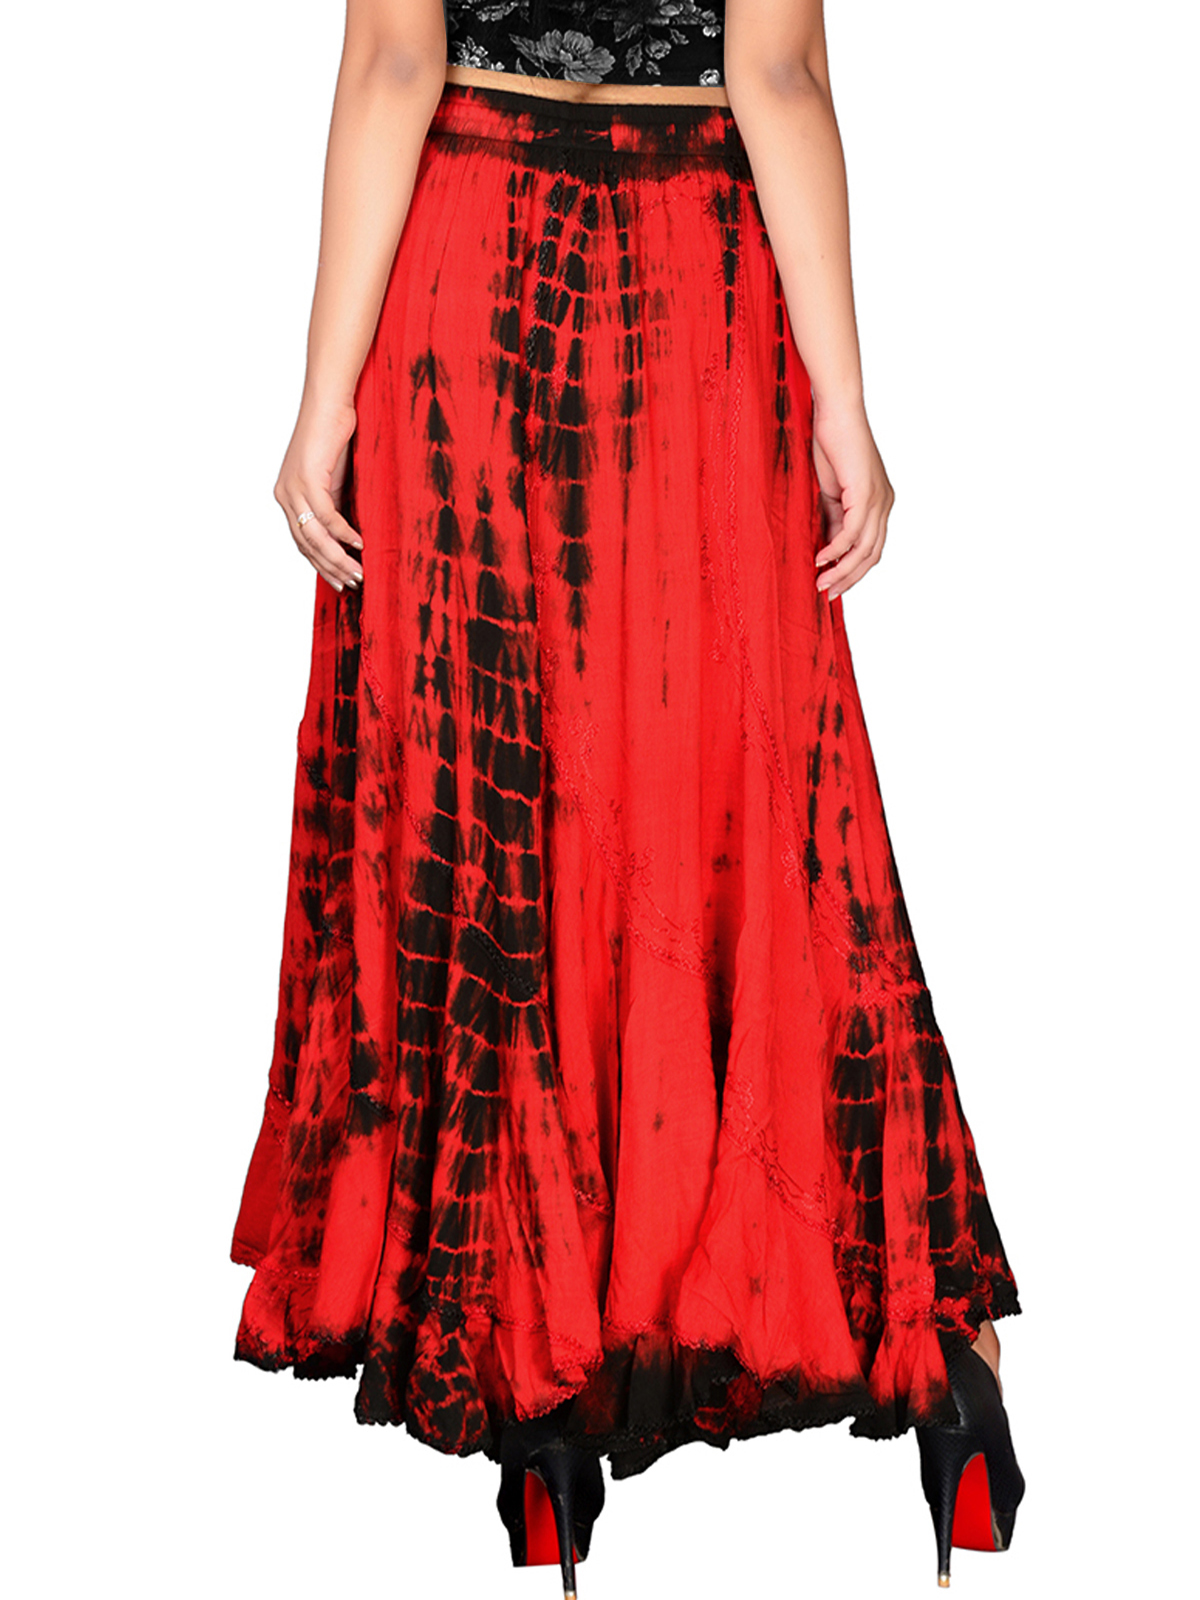 EAONPLUS NEW STUNNING RICH RED Renaissance Scalloped Hem Skirt Sizes UK 18 only 